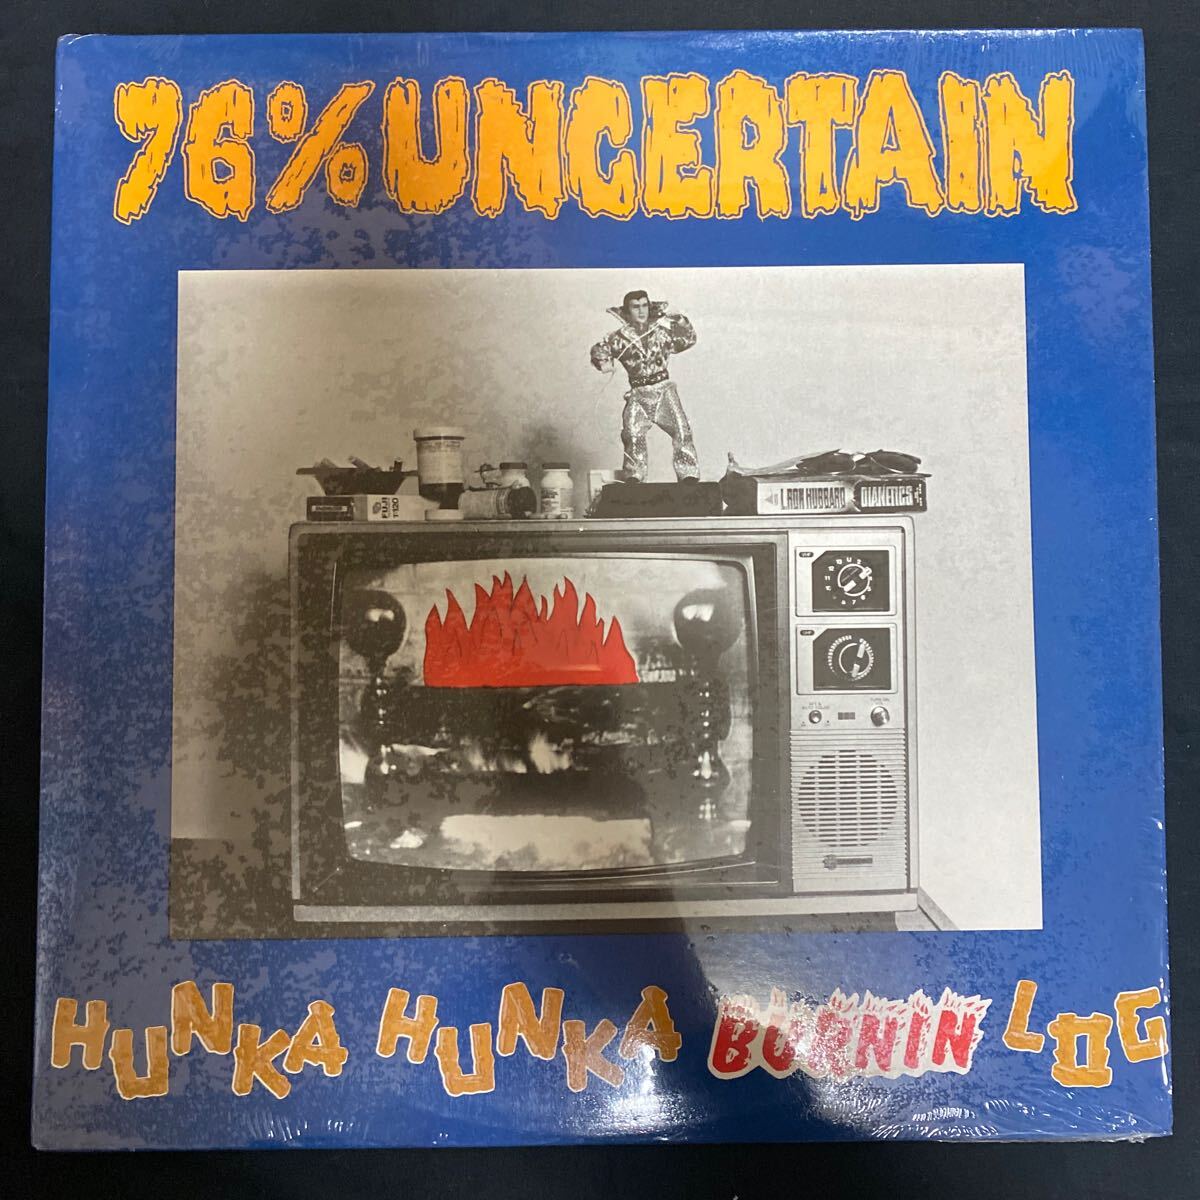 76% Uncertain 「Hunka Hunka Burnin' Log」 GR16021-1 1989年 インサート付き レコード LP_画像1